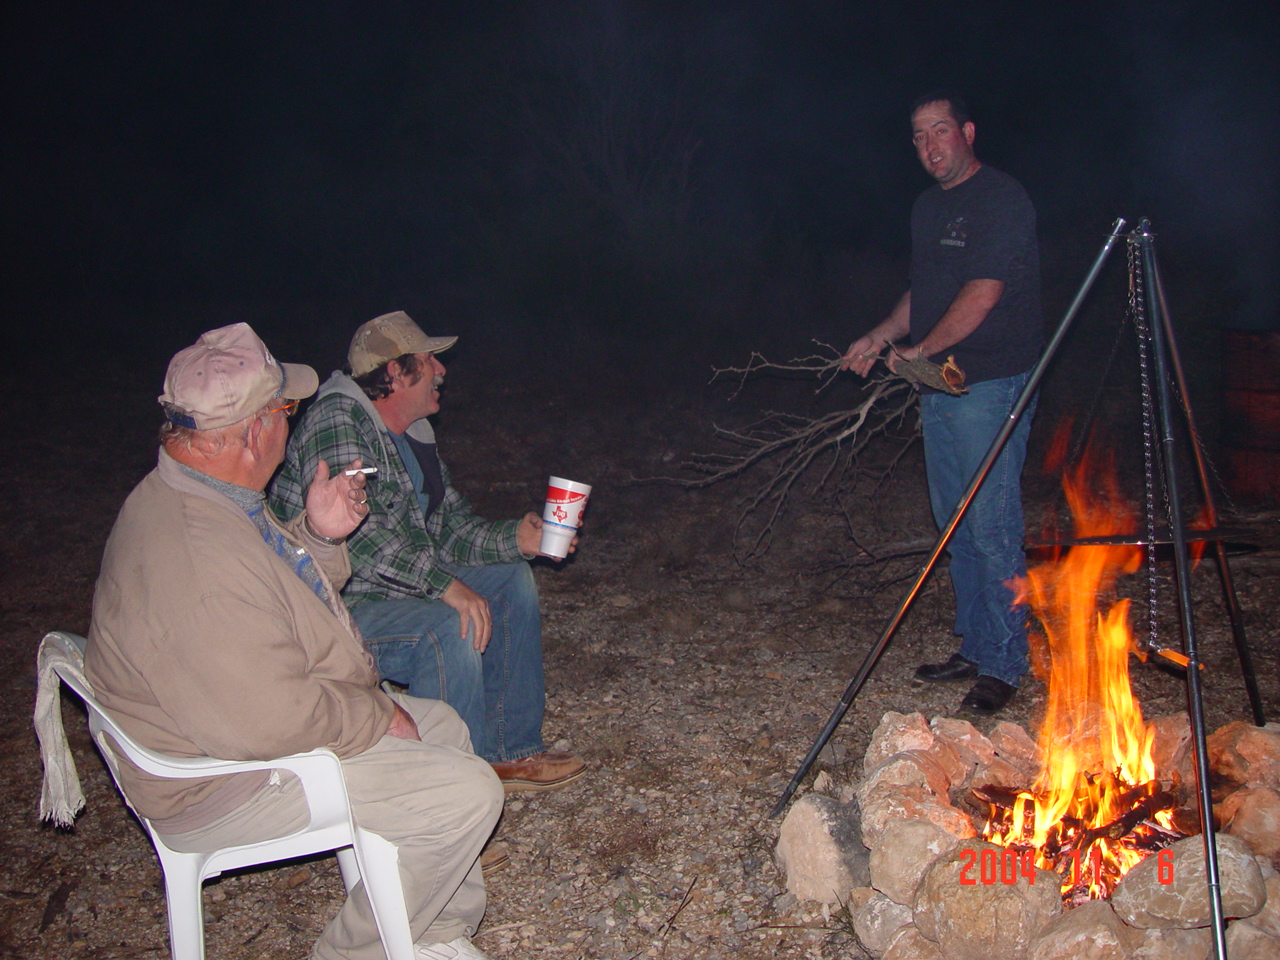 Campfire Stories
